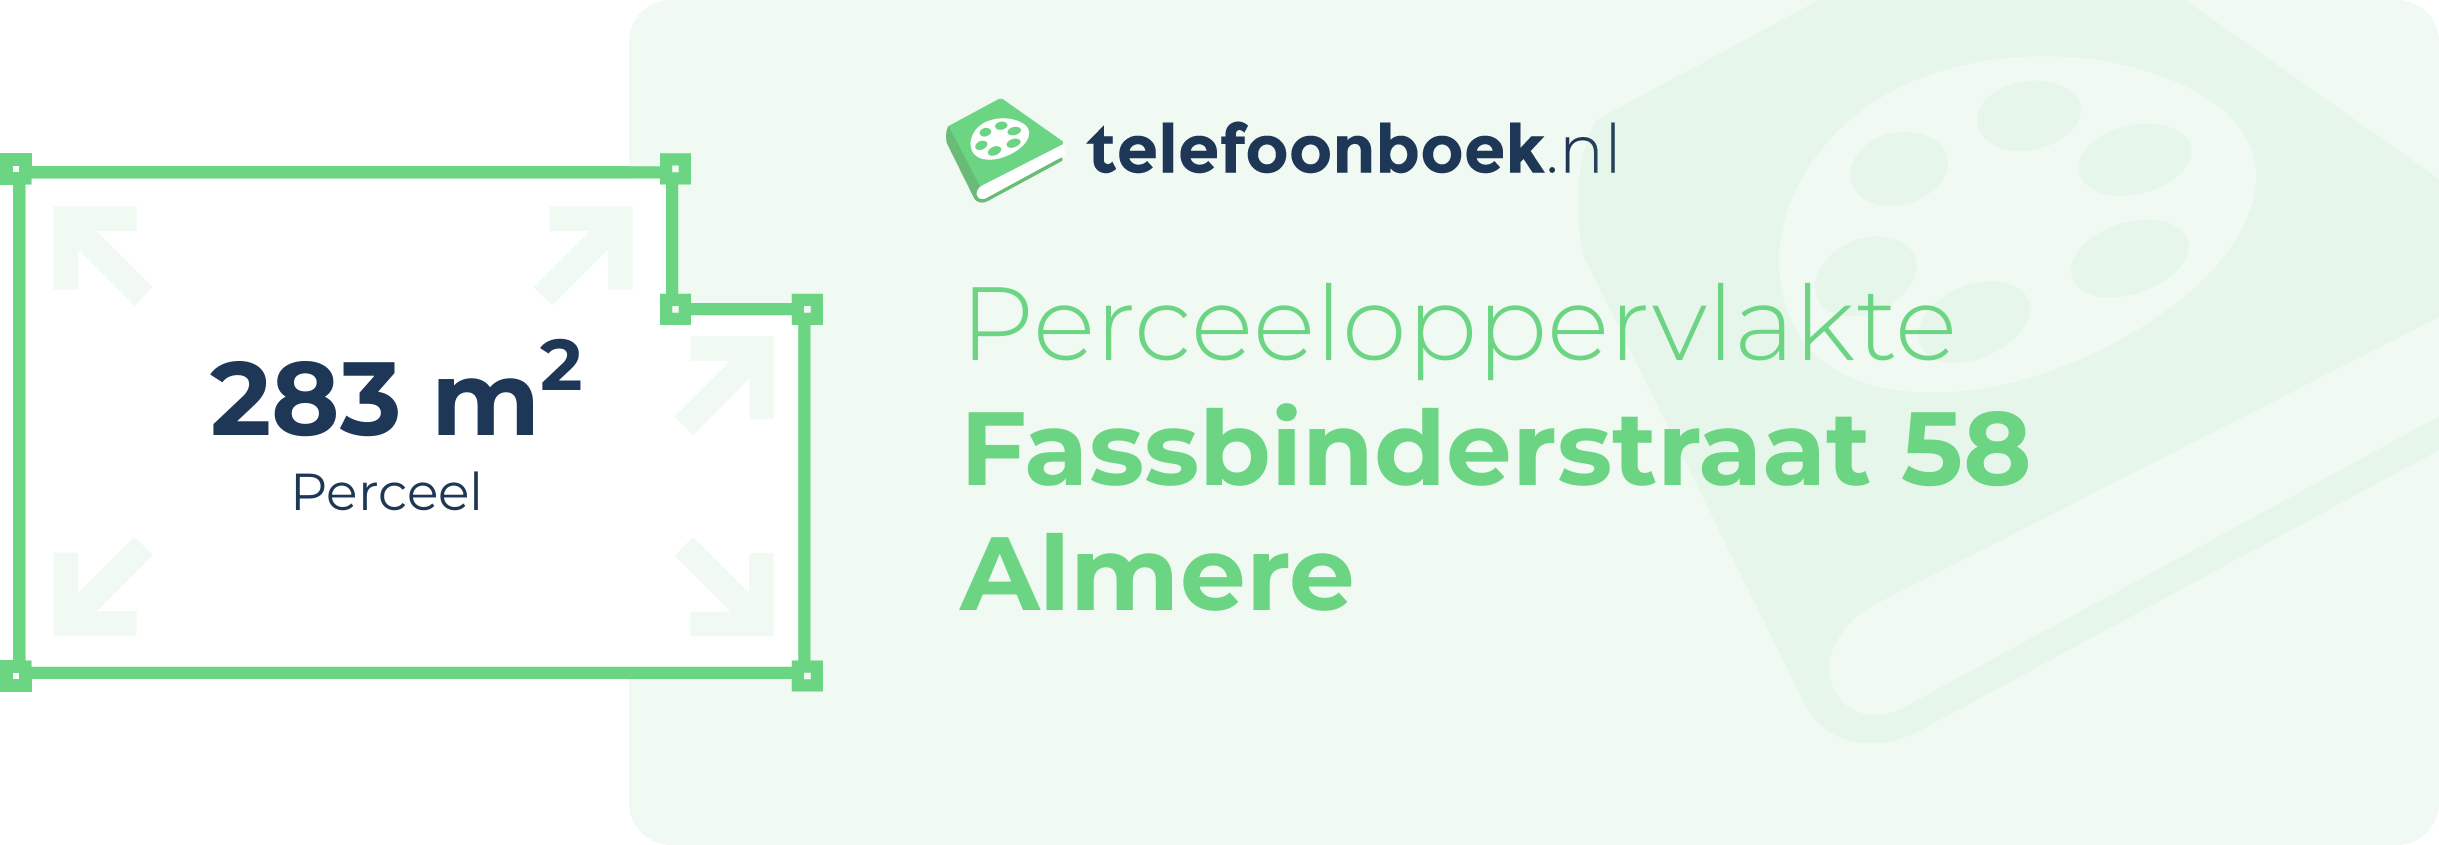 Perceeloppervlakte Fassbinderstraat 58 Almere